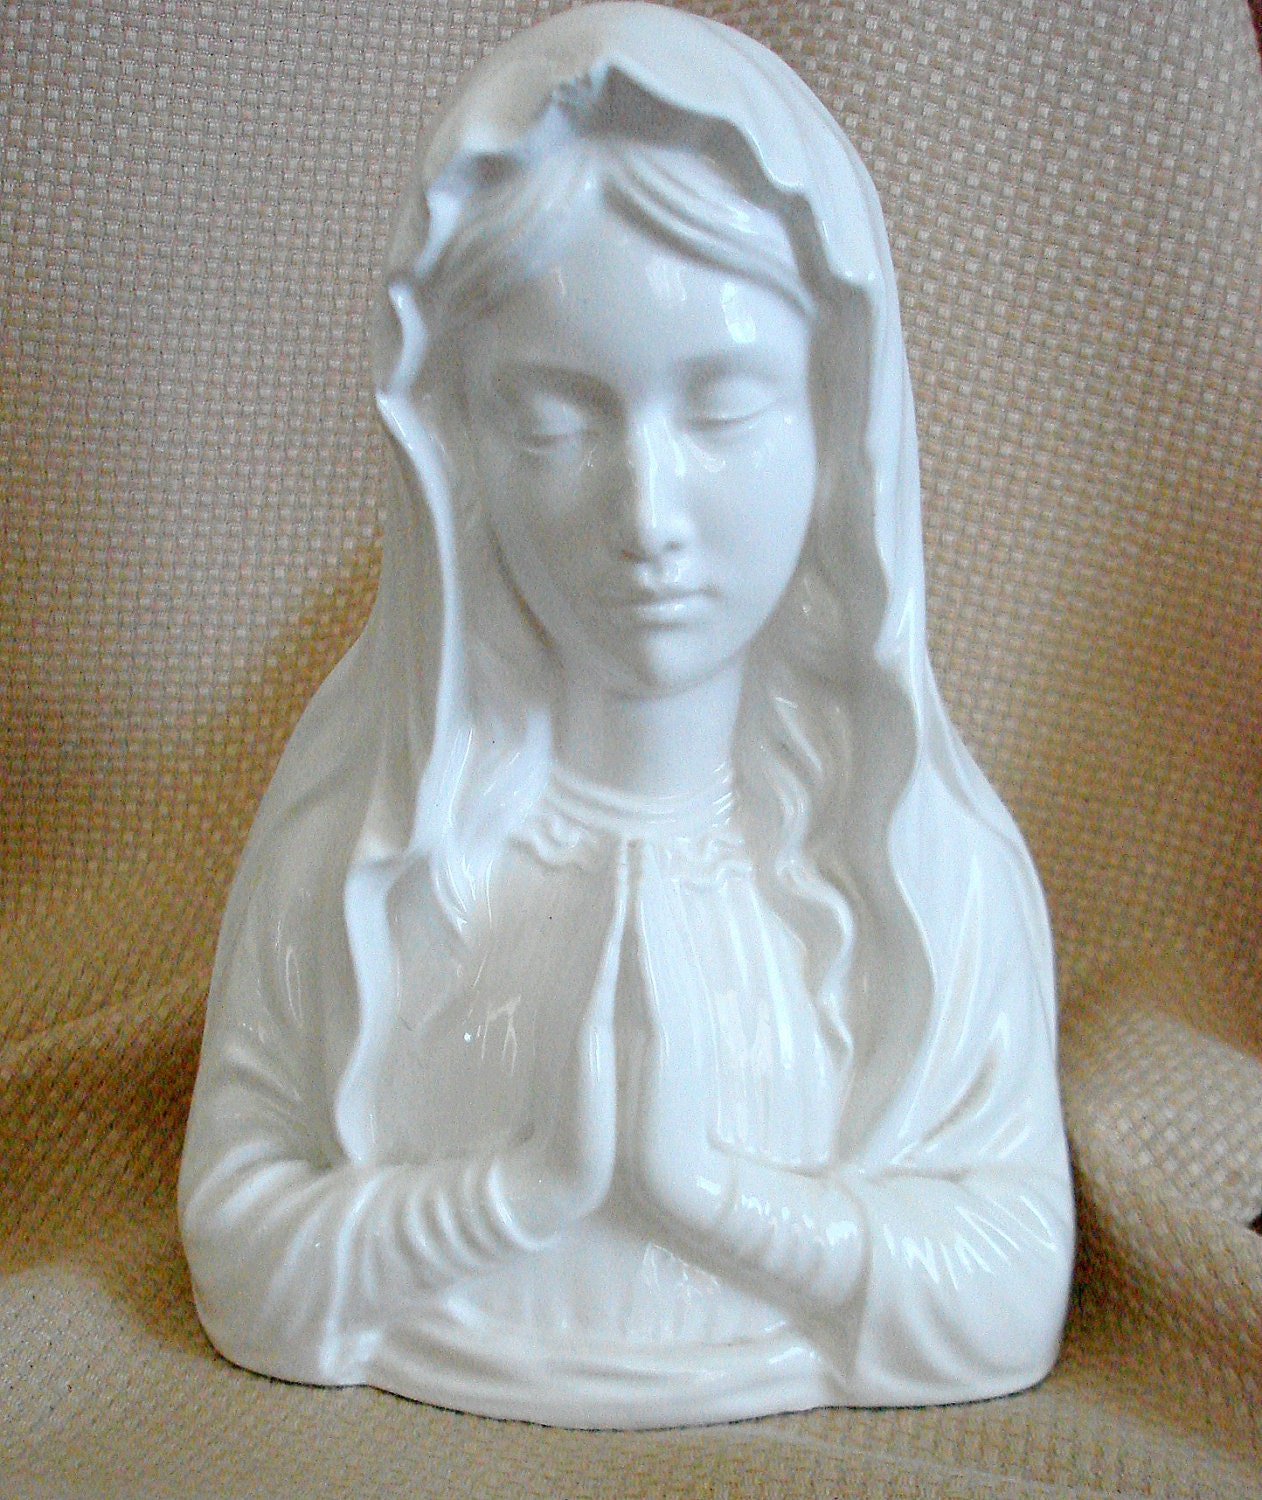 SALE Vintage Replo Madonna Head Vase Planter, Hands in Prayer, Ceramic